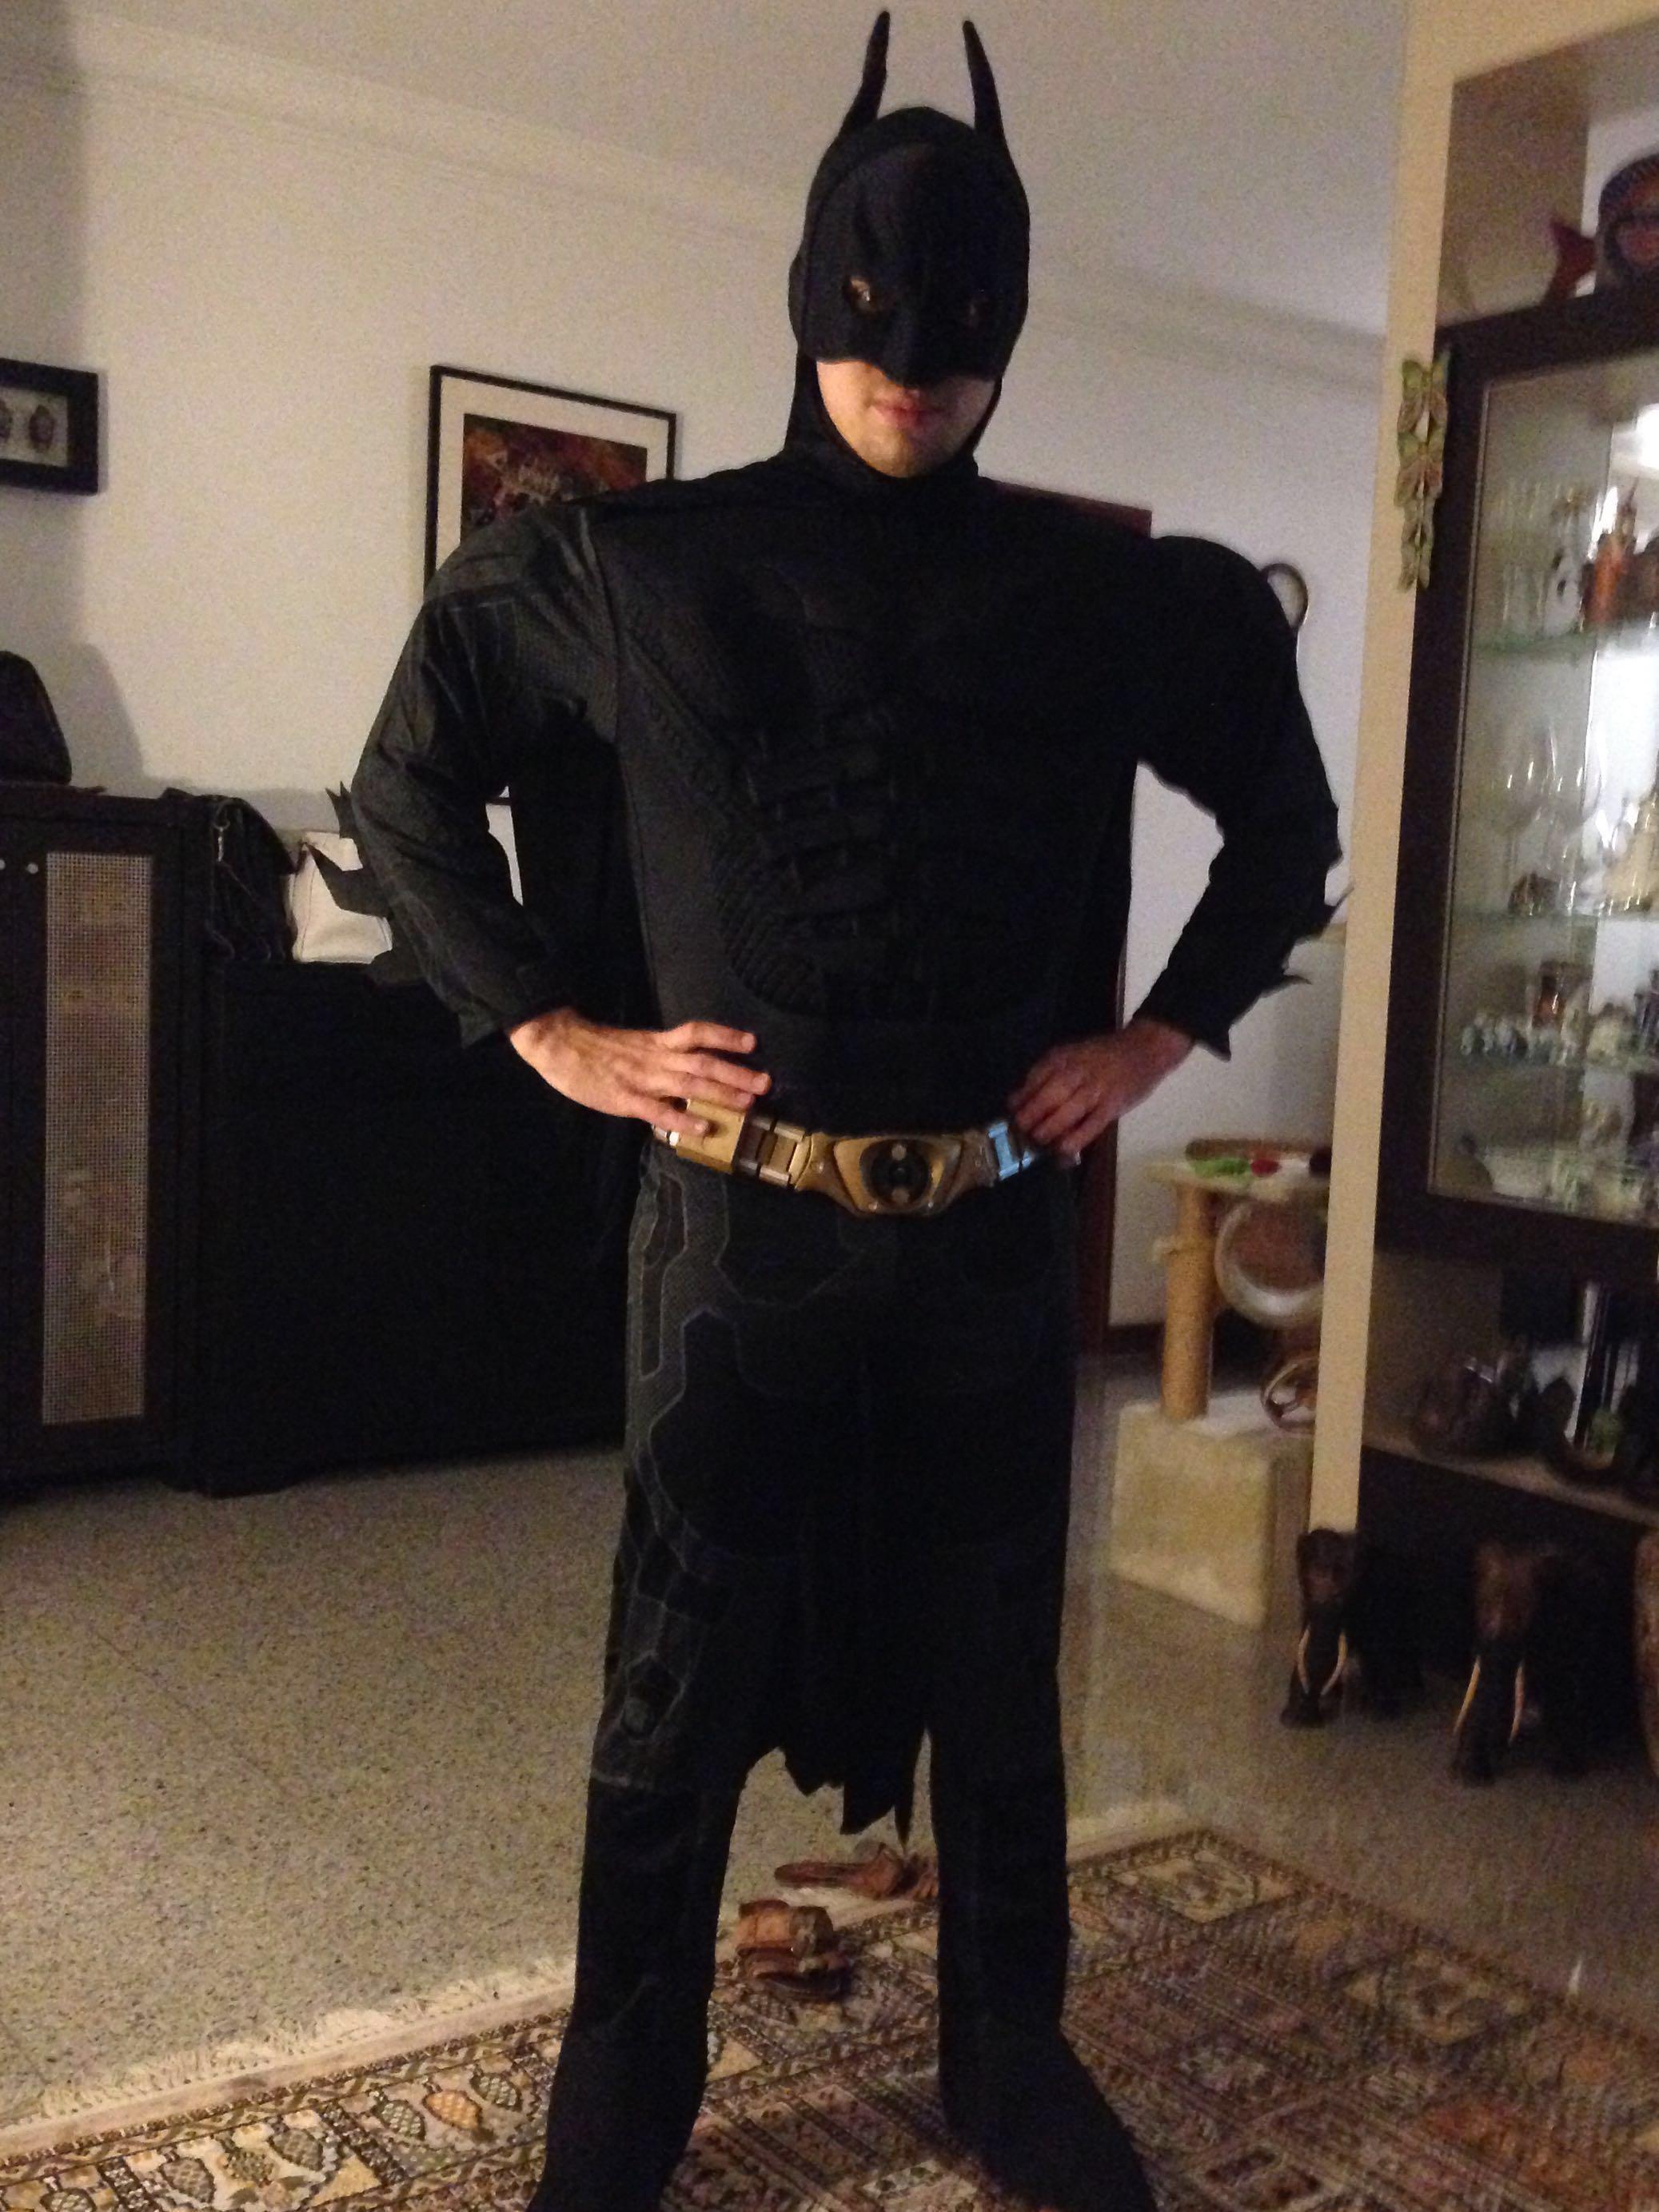 Adult Deluxe Dark Knight Batman Costume